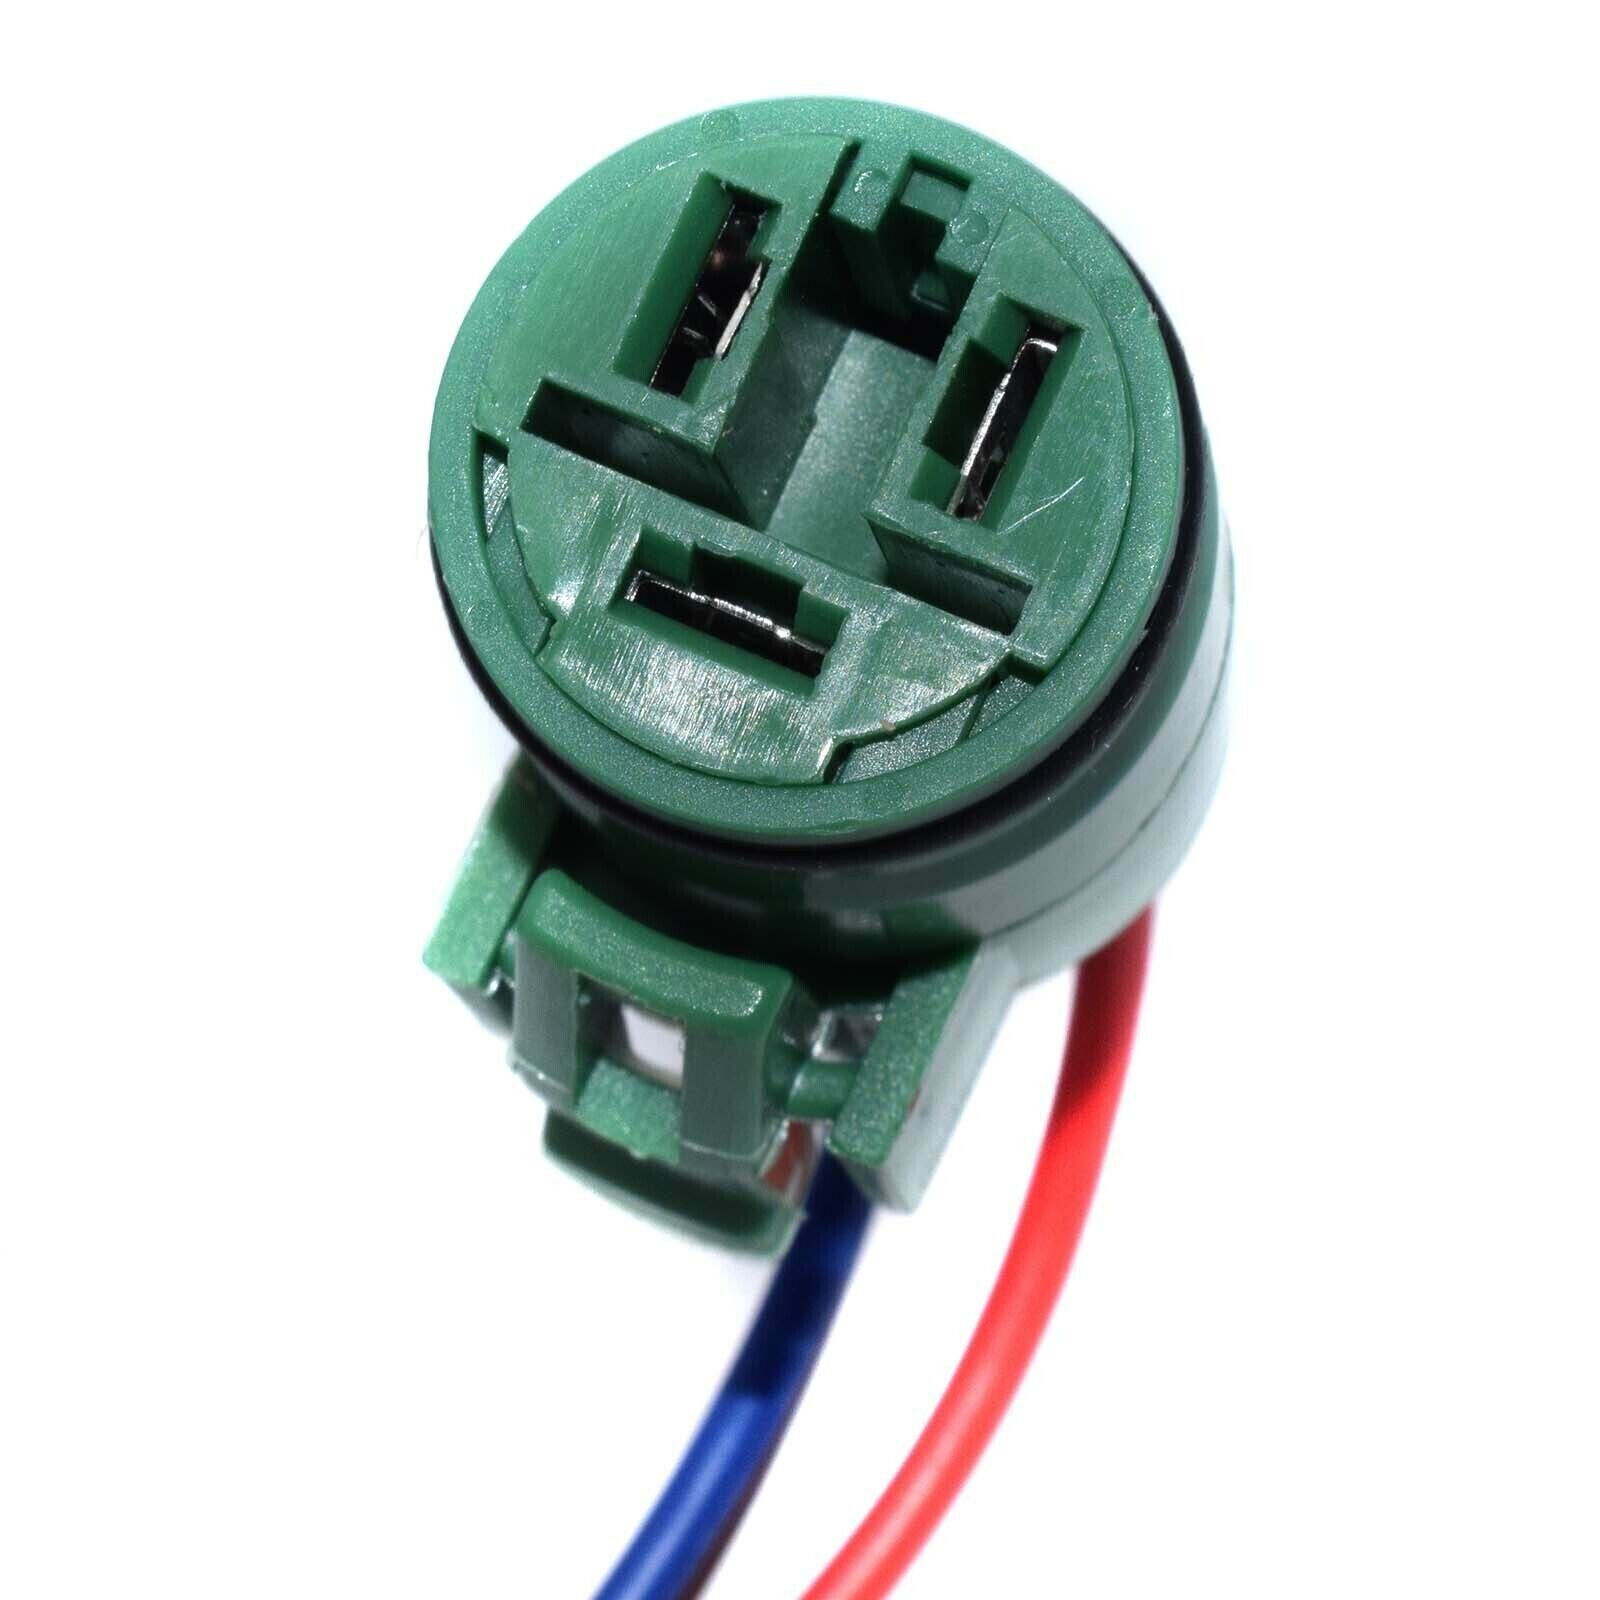 Alternator Repair Plug Harness Connector for Toyota Honda Lexus Deere 3 Wire